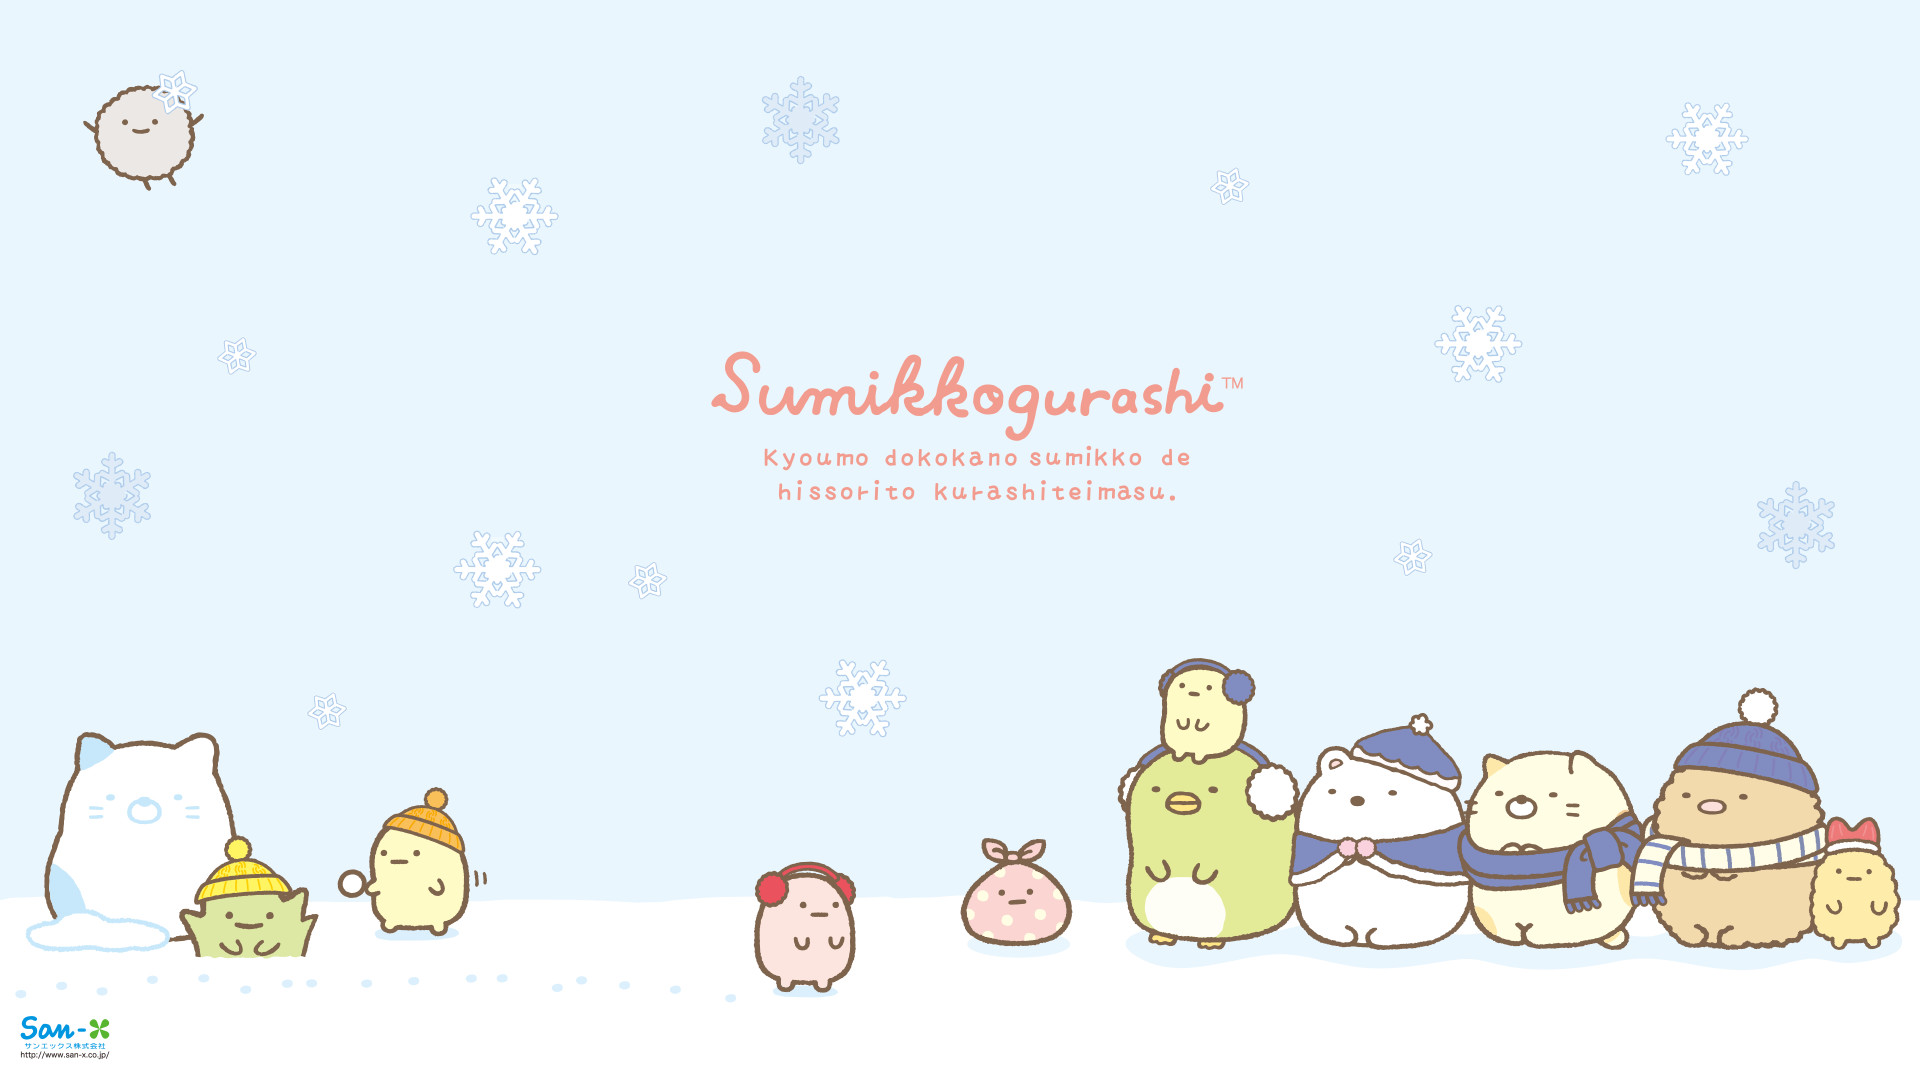 New Sumikkogurashi Christmas Wallpaper – Living quietly in the corner Such a cute bunch in the snow Sumikkogurashi is so cute and random